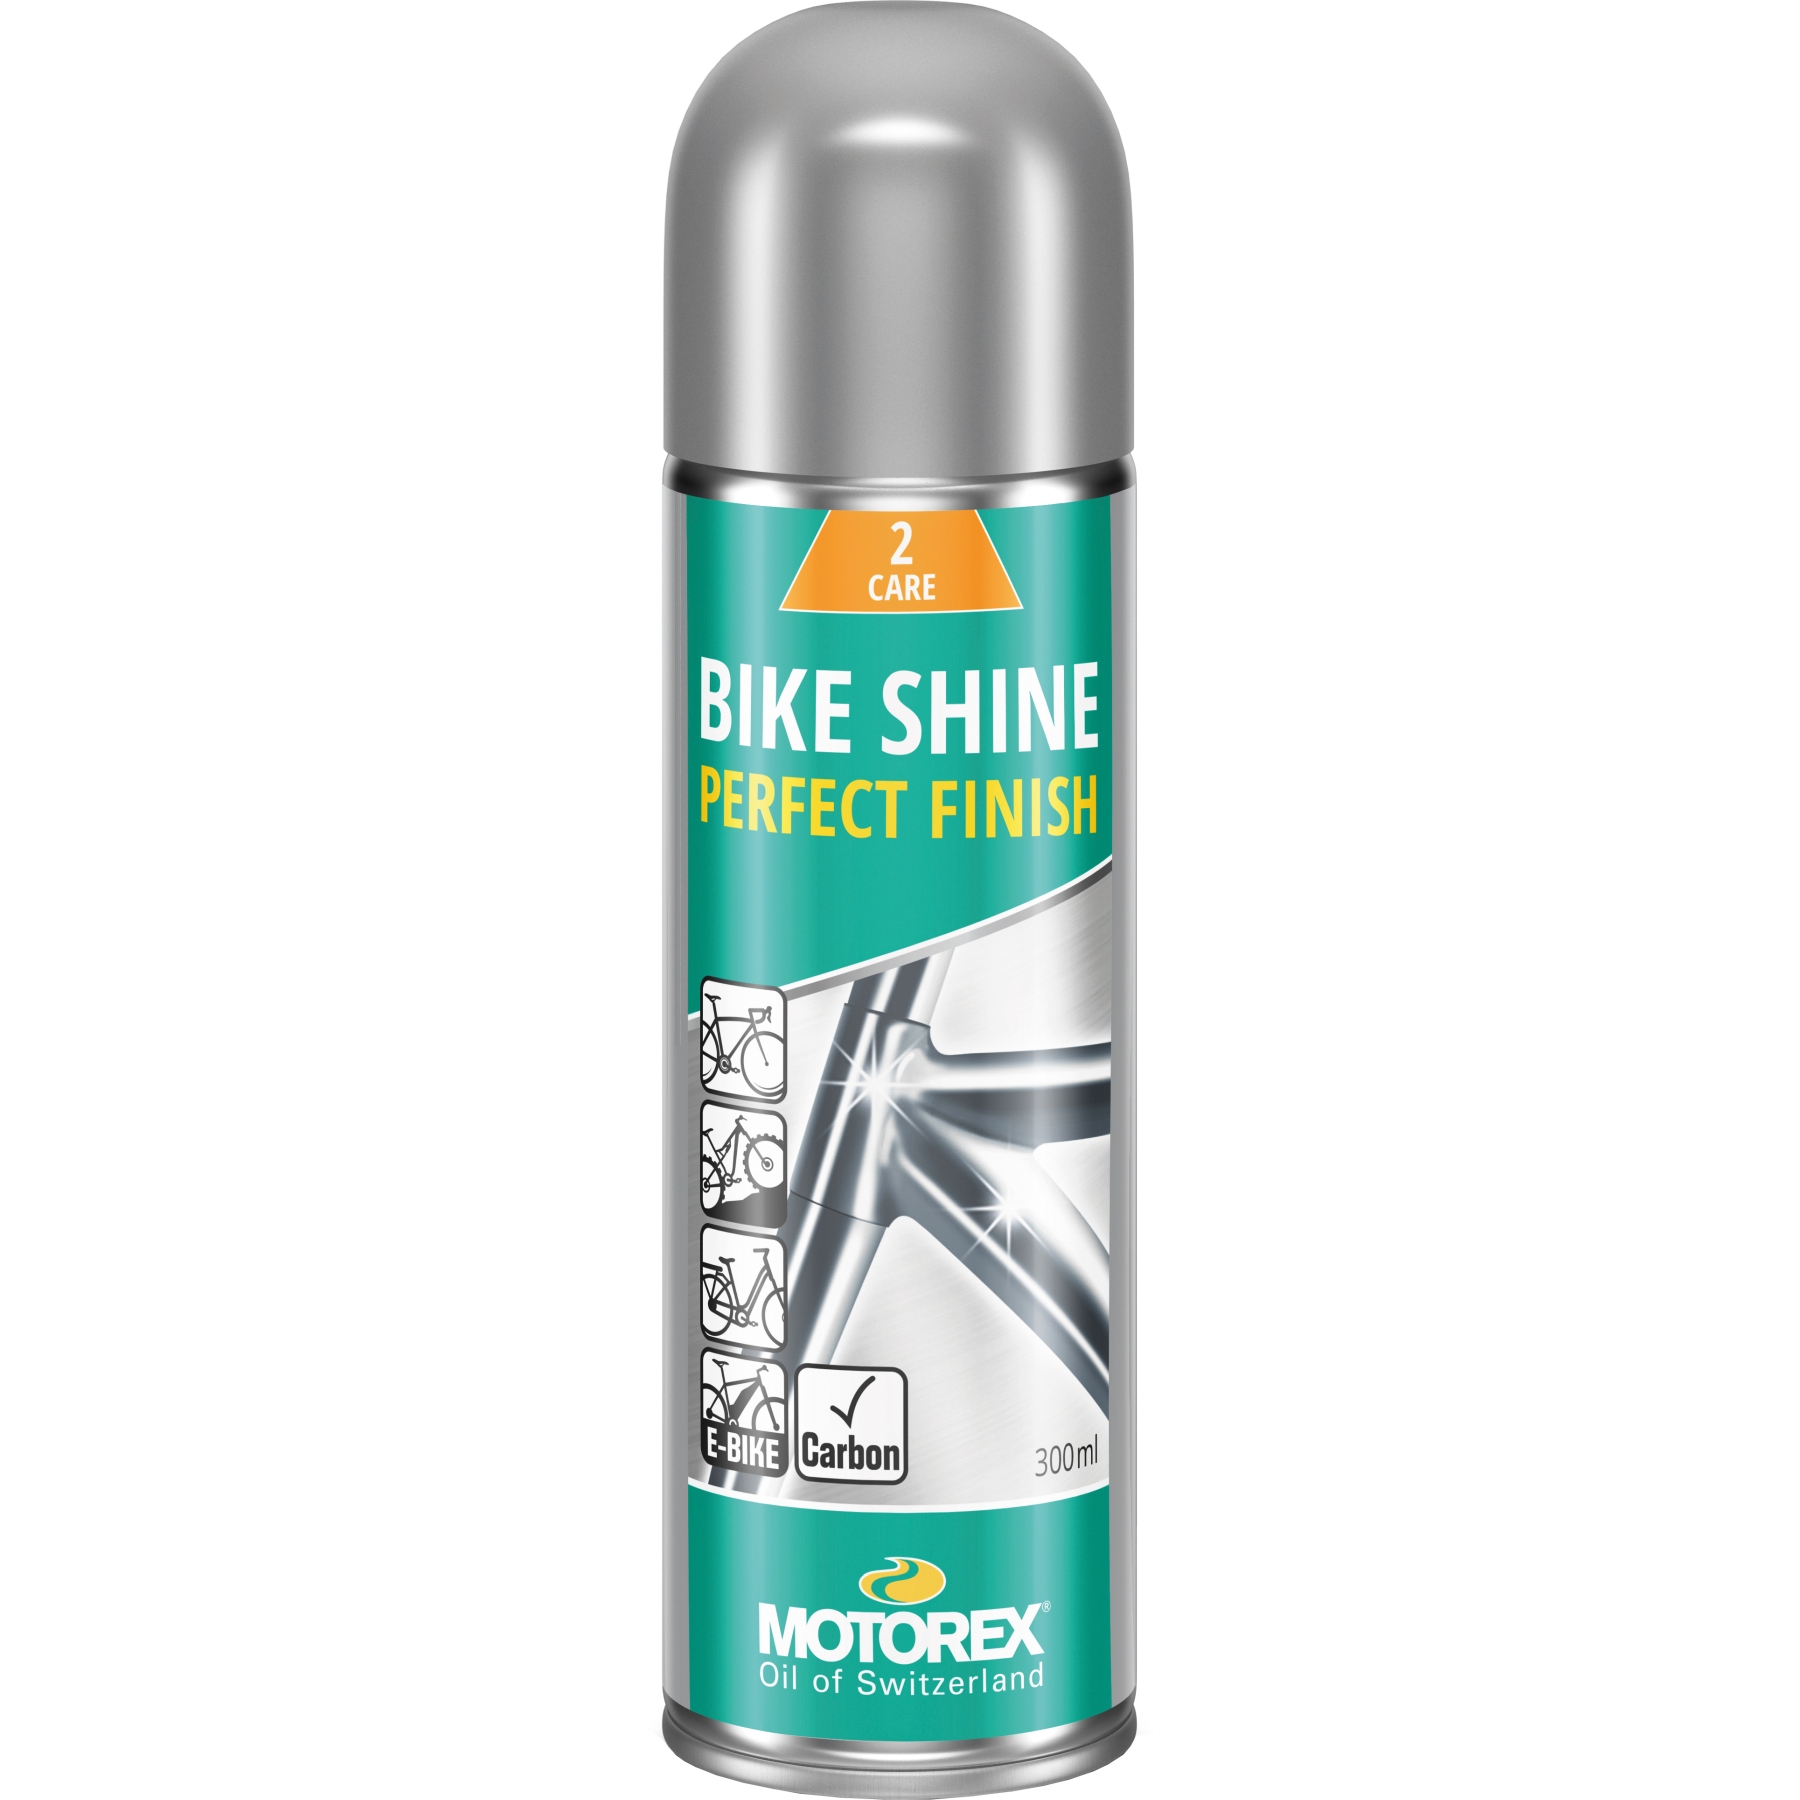 Image of Motorex Bike Shine - Care and Protection - Spray - 300ml